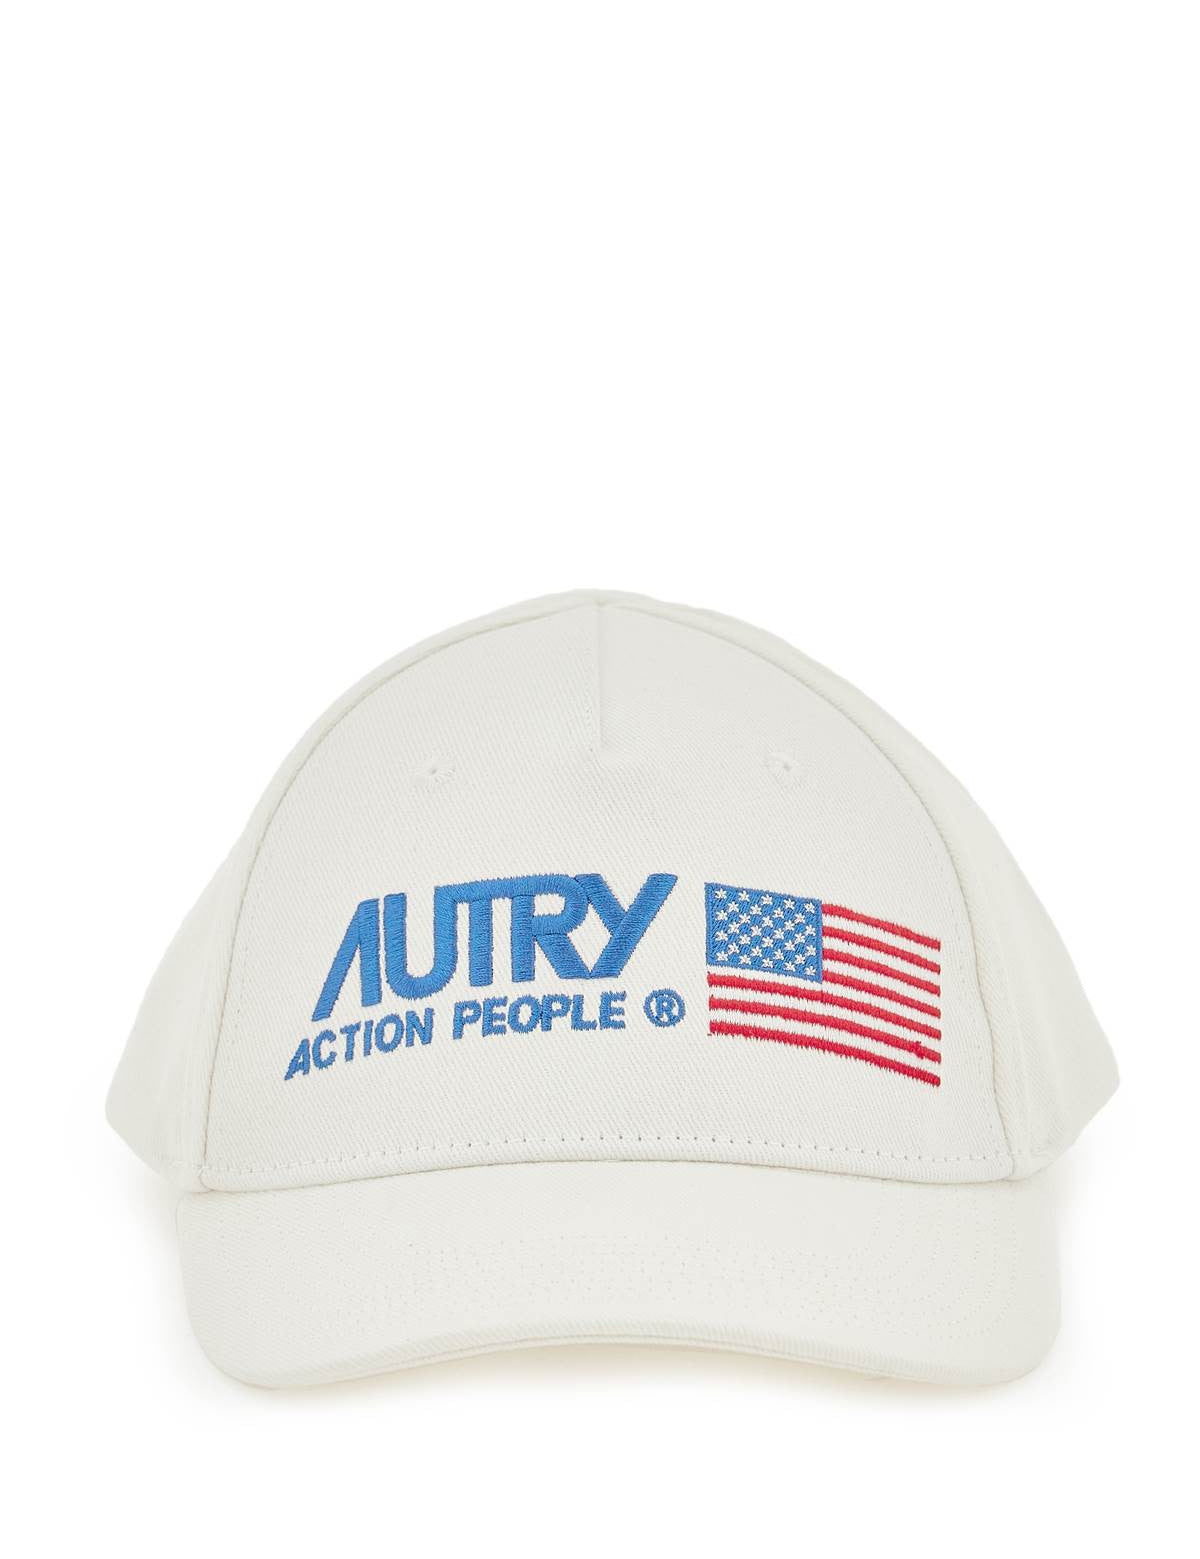 autry-iconic-logo-baseball-cap.jpg